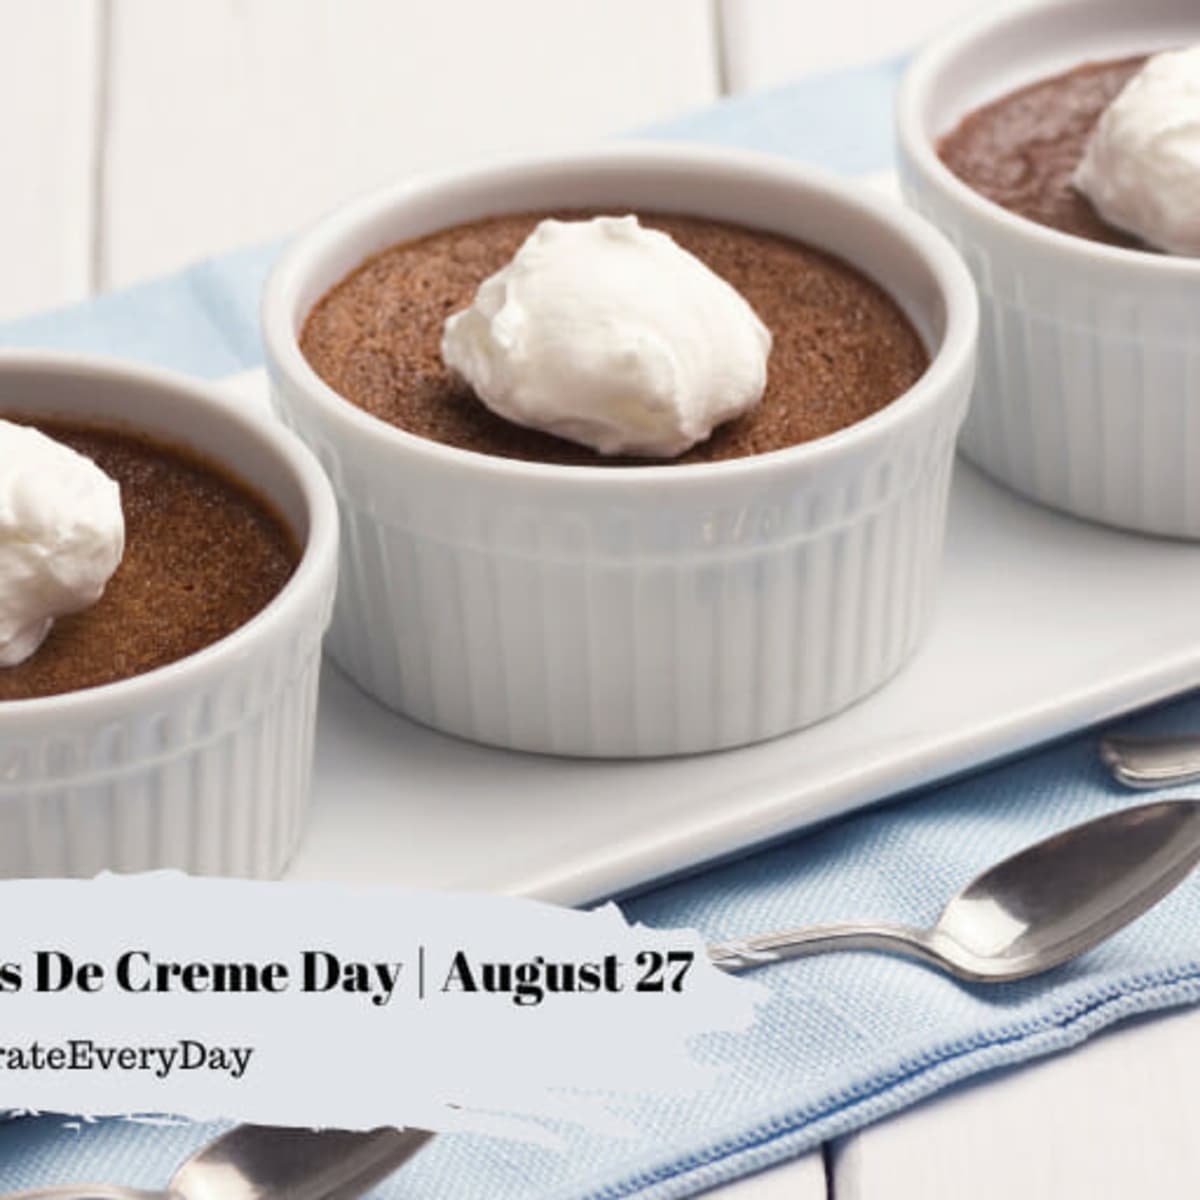 Dress Up Brown-Bag Dessert with Pot de Crème - The New York Times